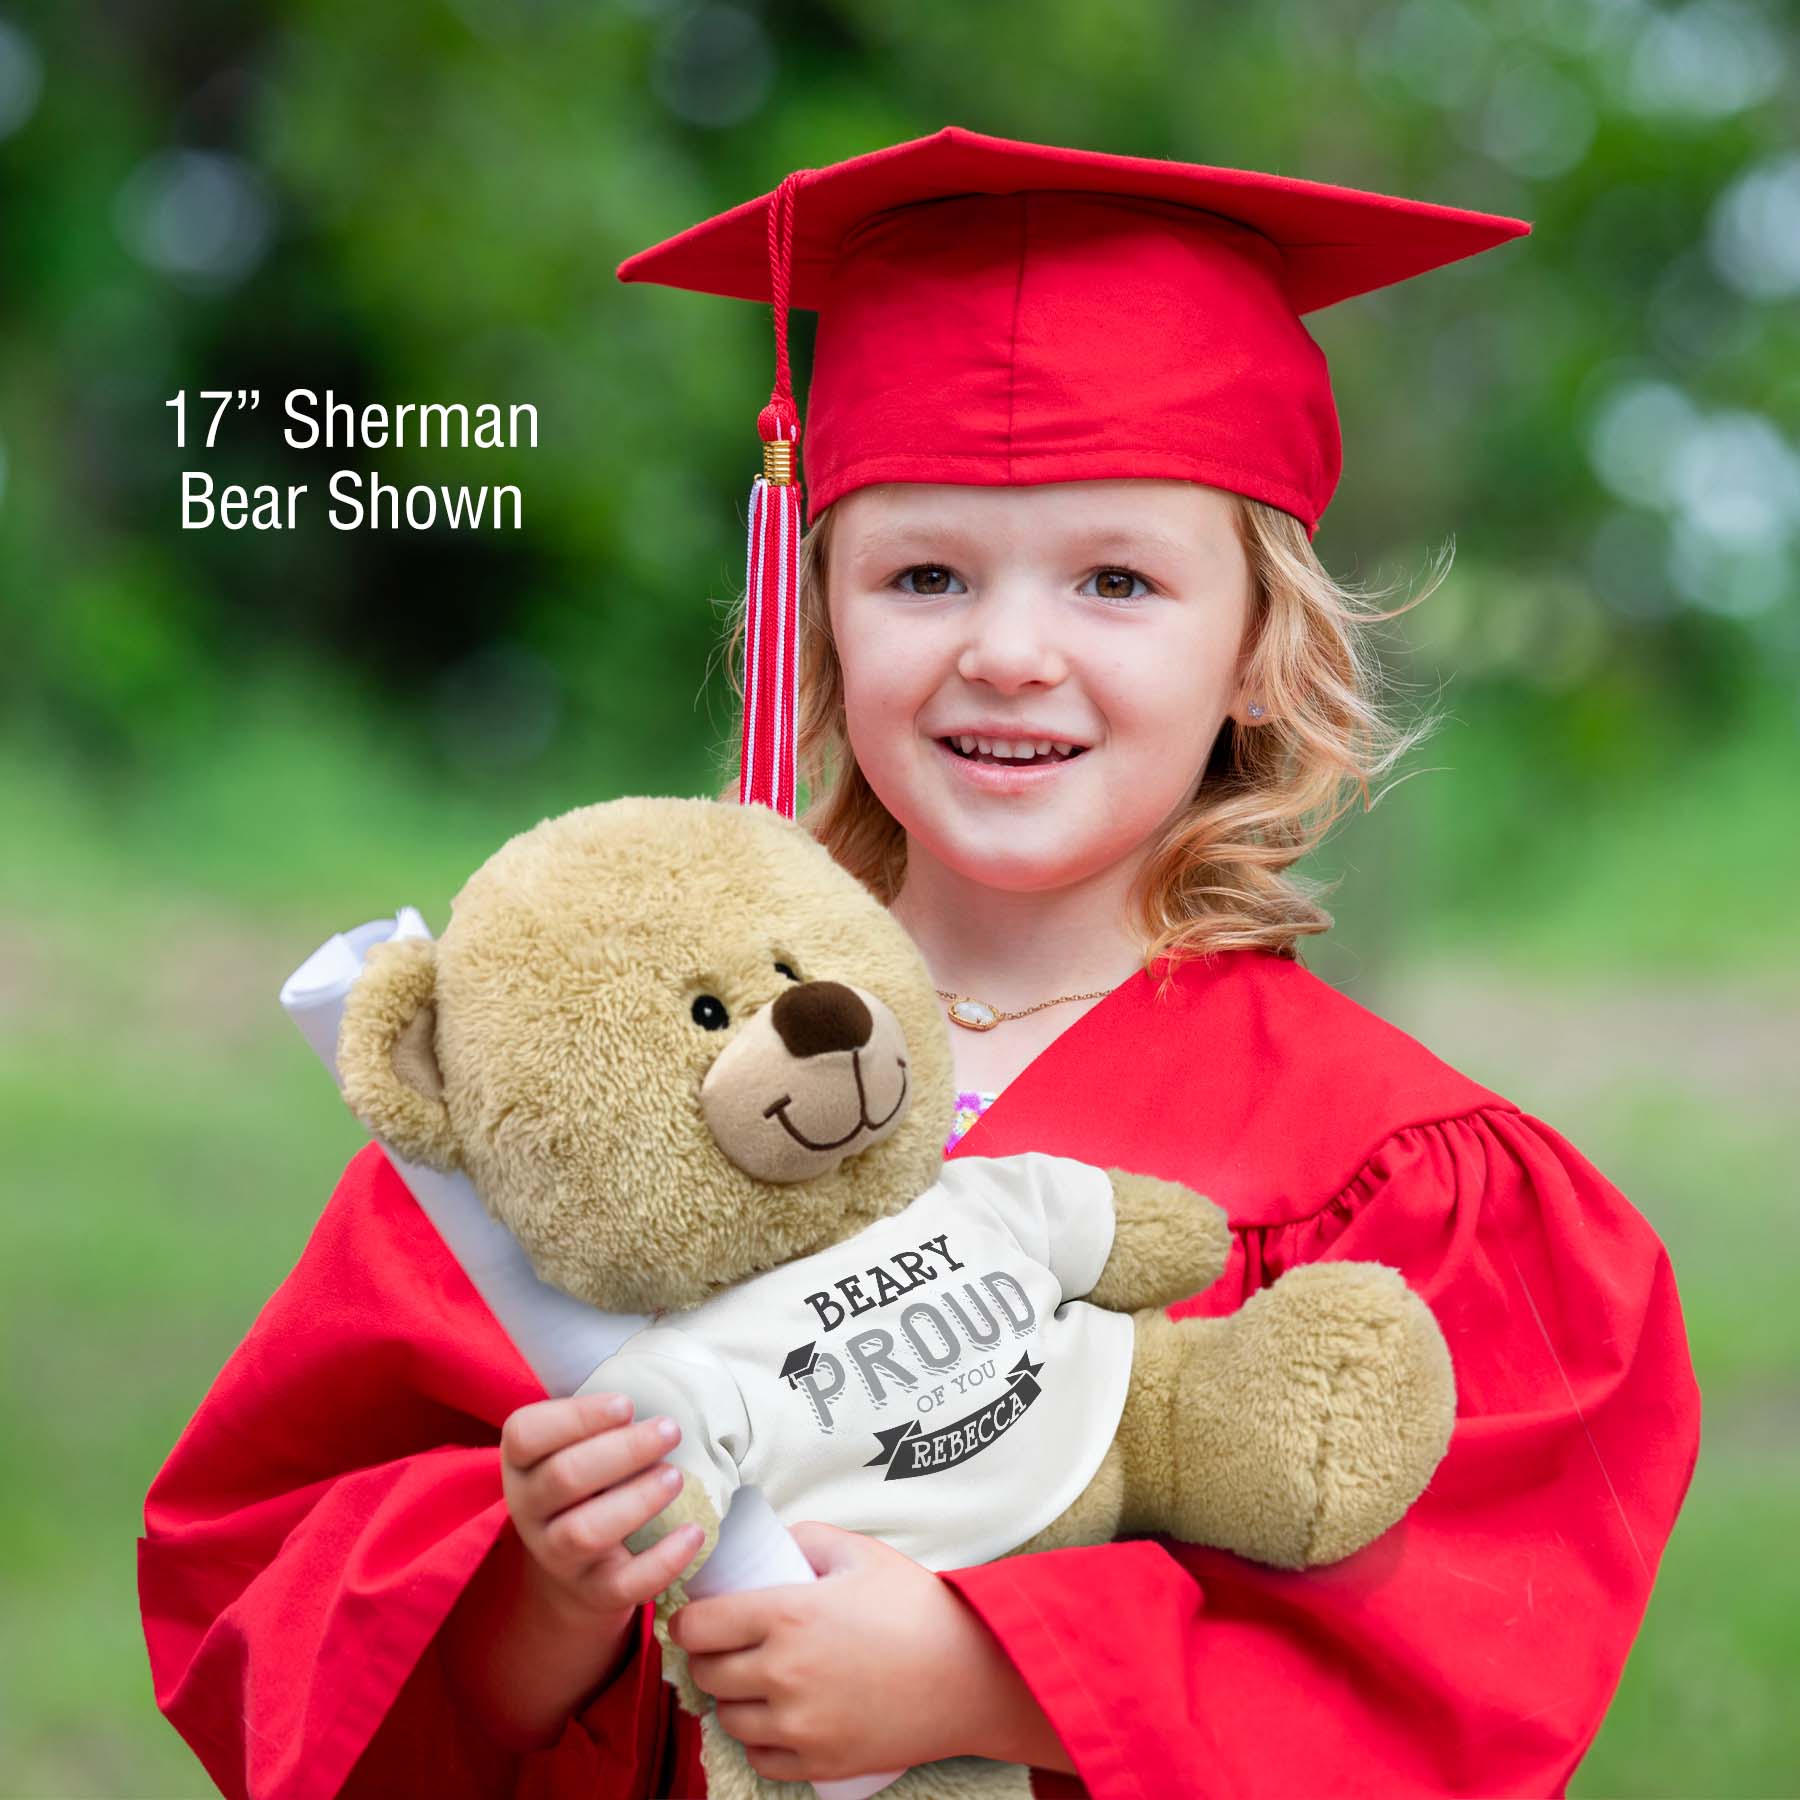 Personalized Beary Proud Graduation Teddy Bear | Graduation Gifts